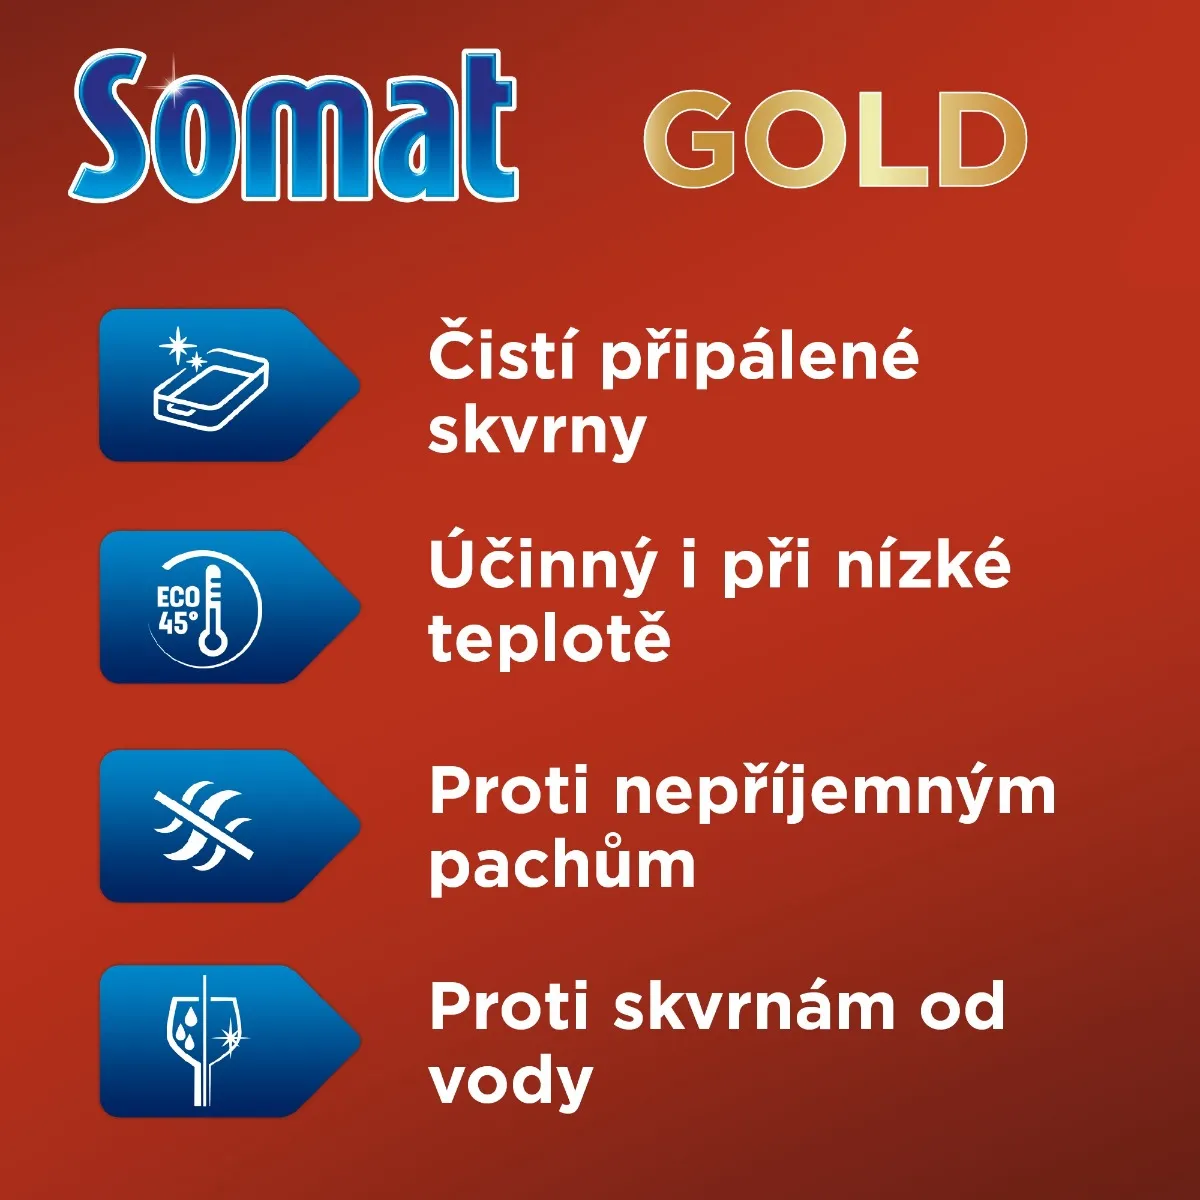 Somat Tablety do myčky Gold 90 ks